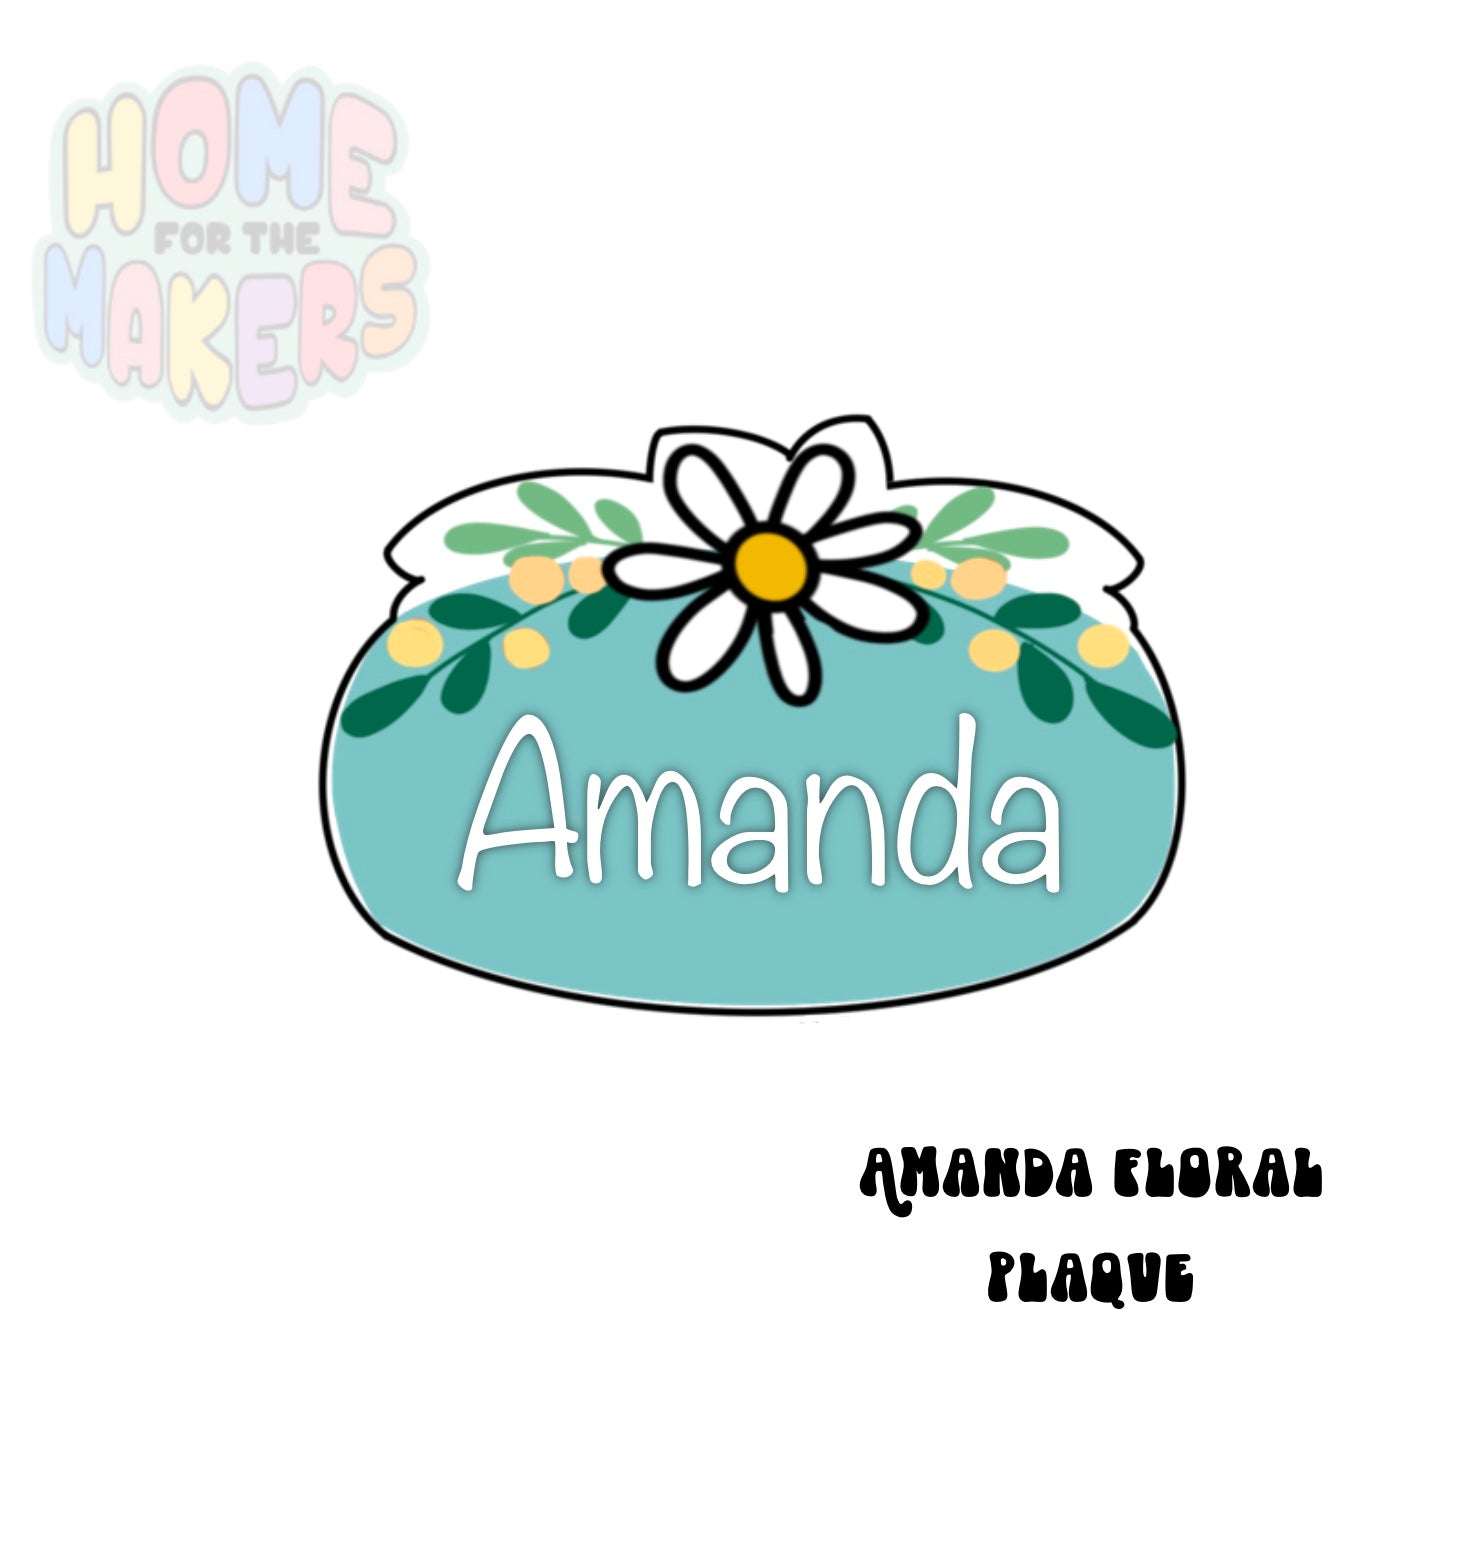 Amanda Floral Plaque